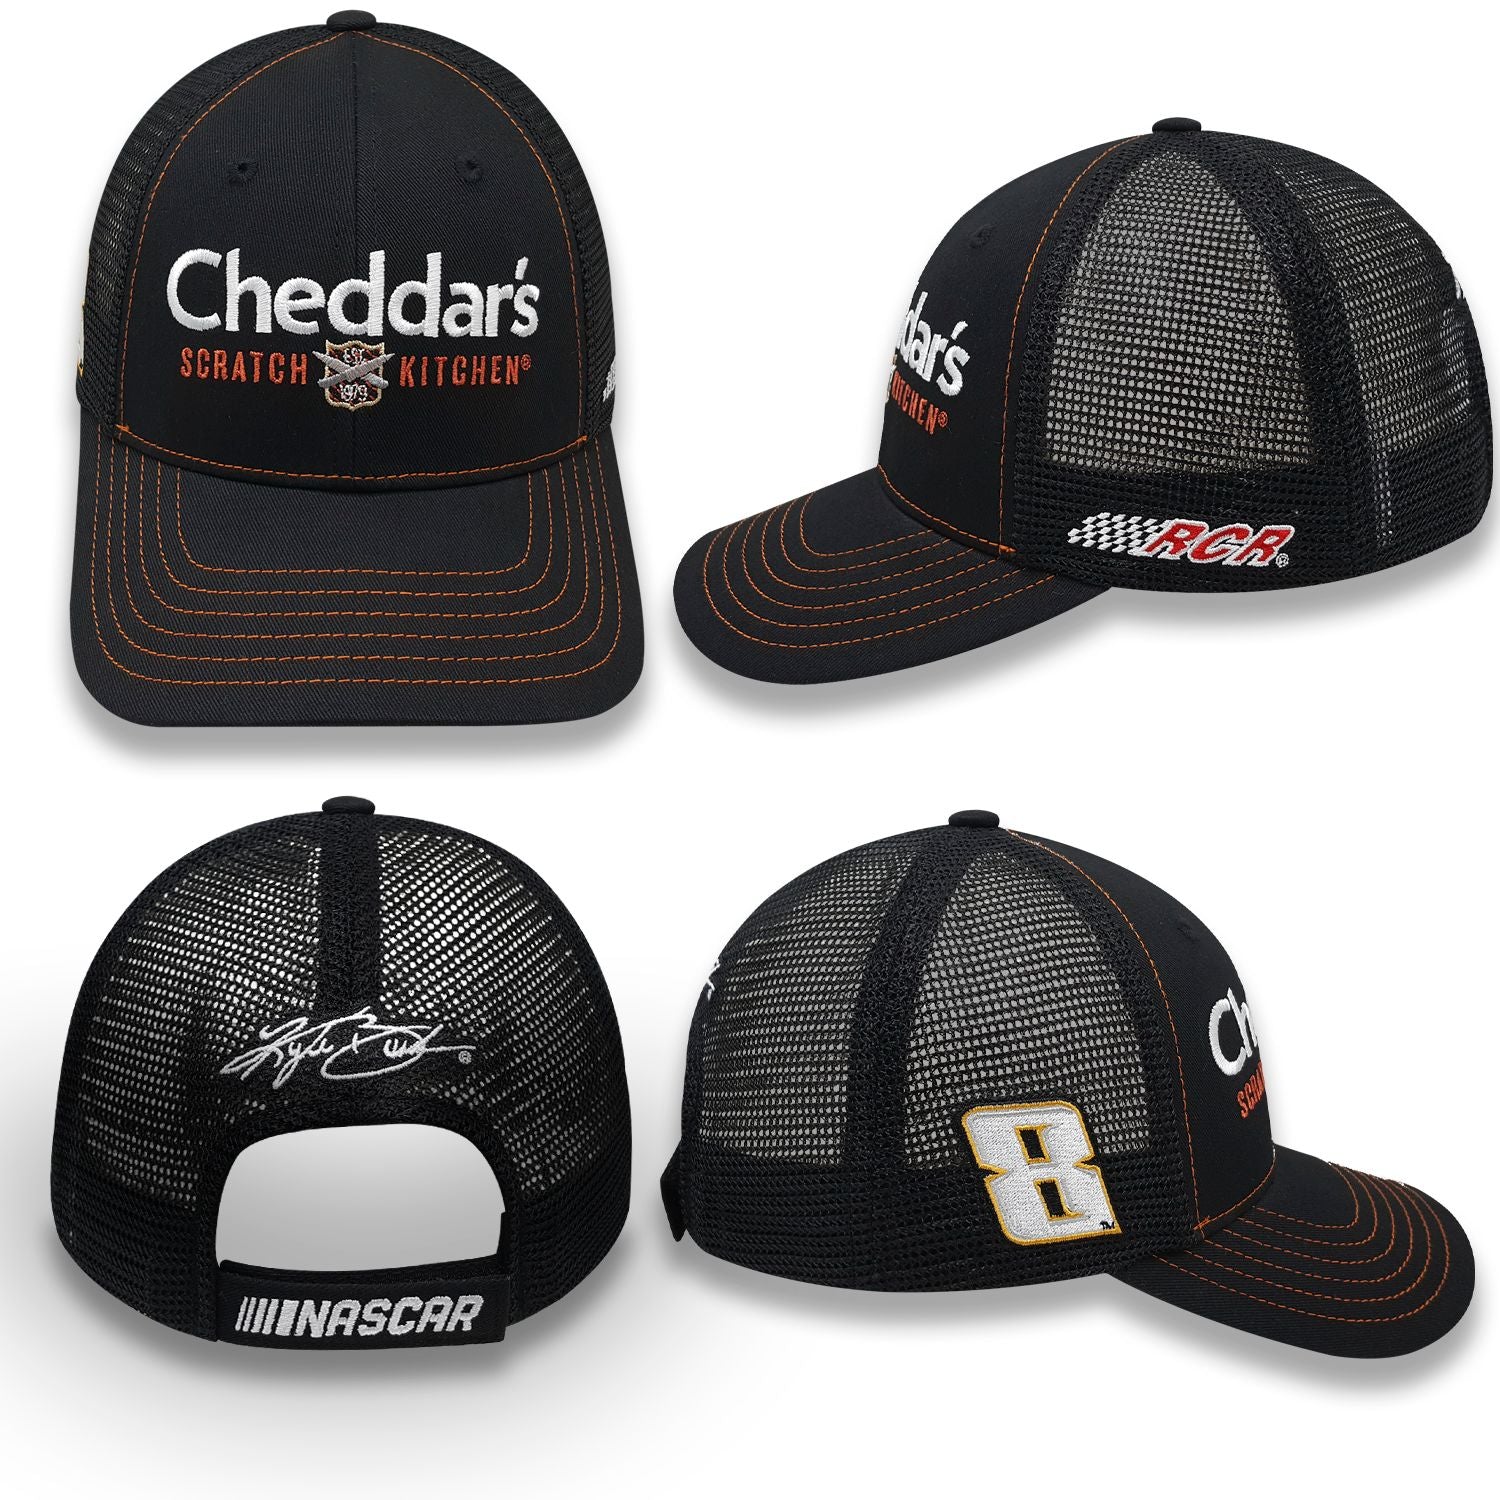 Kyle Busch #8 Cheddar's Sponsor Hat